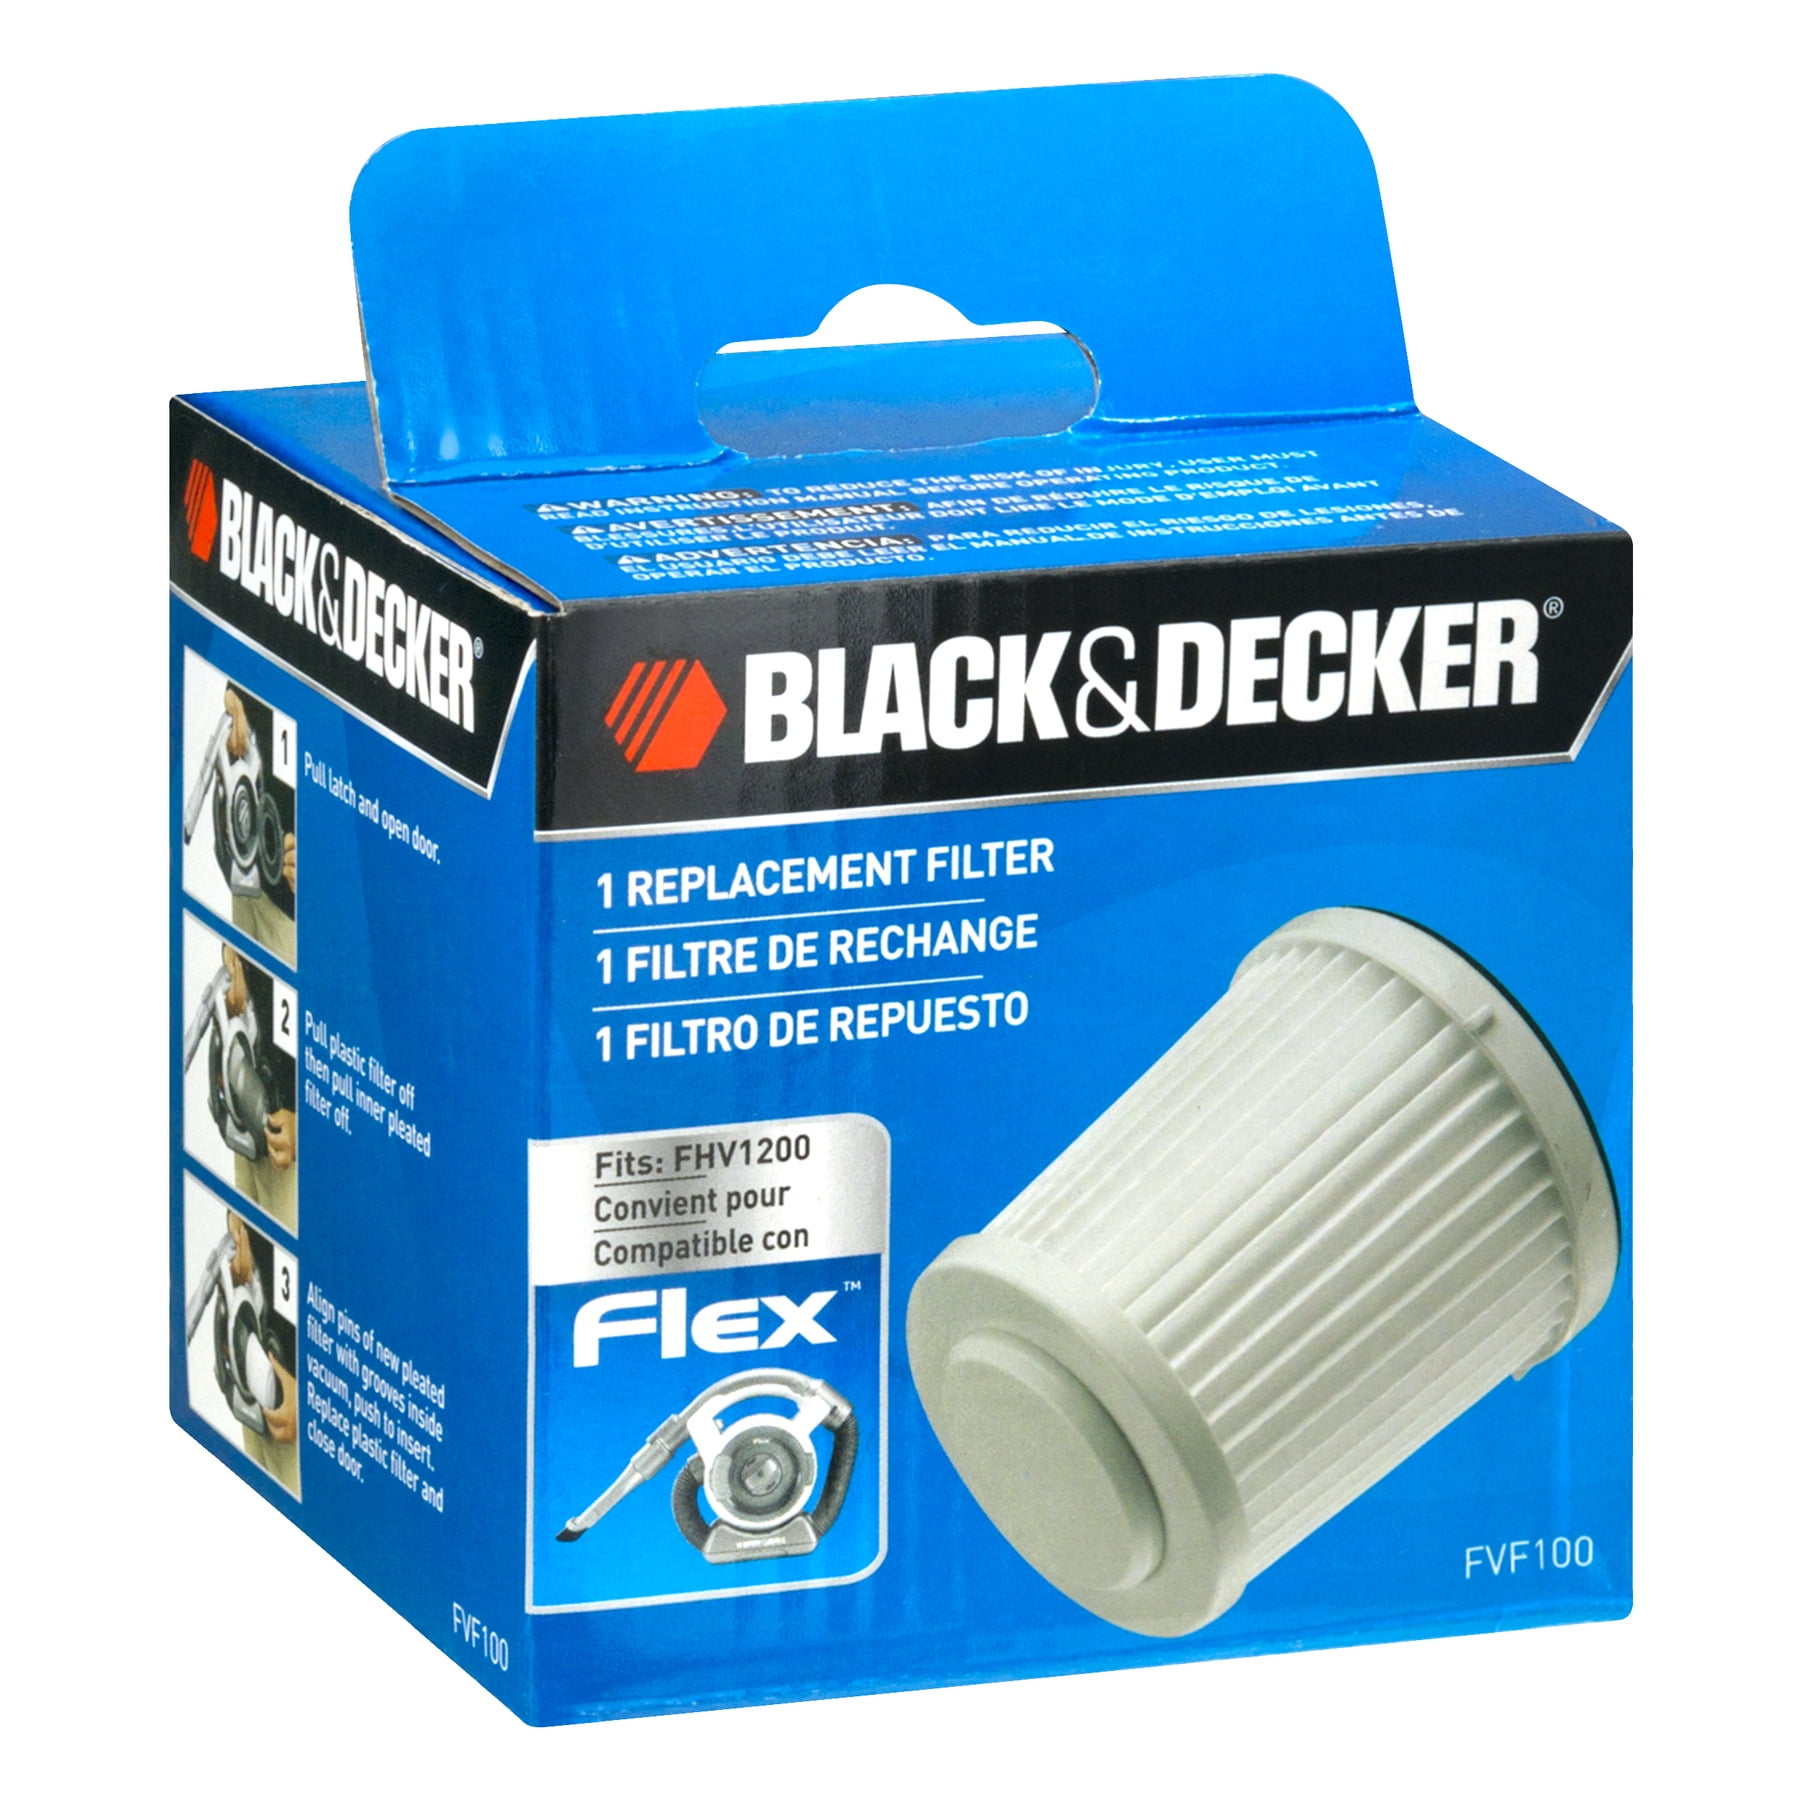 Black & Decker Fvf100 Flex Vacuum Filter